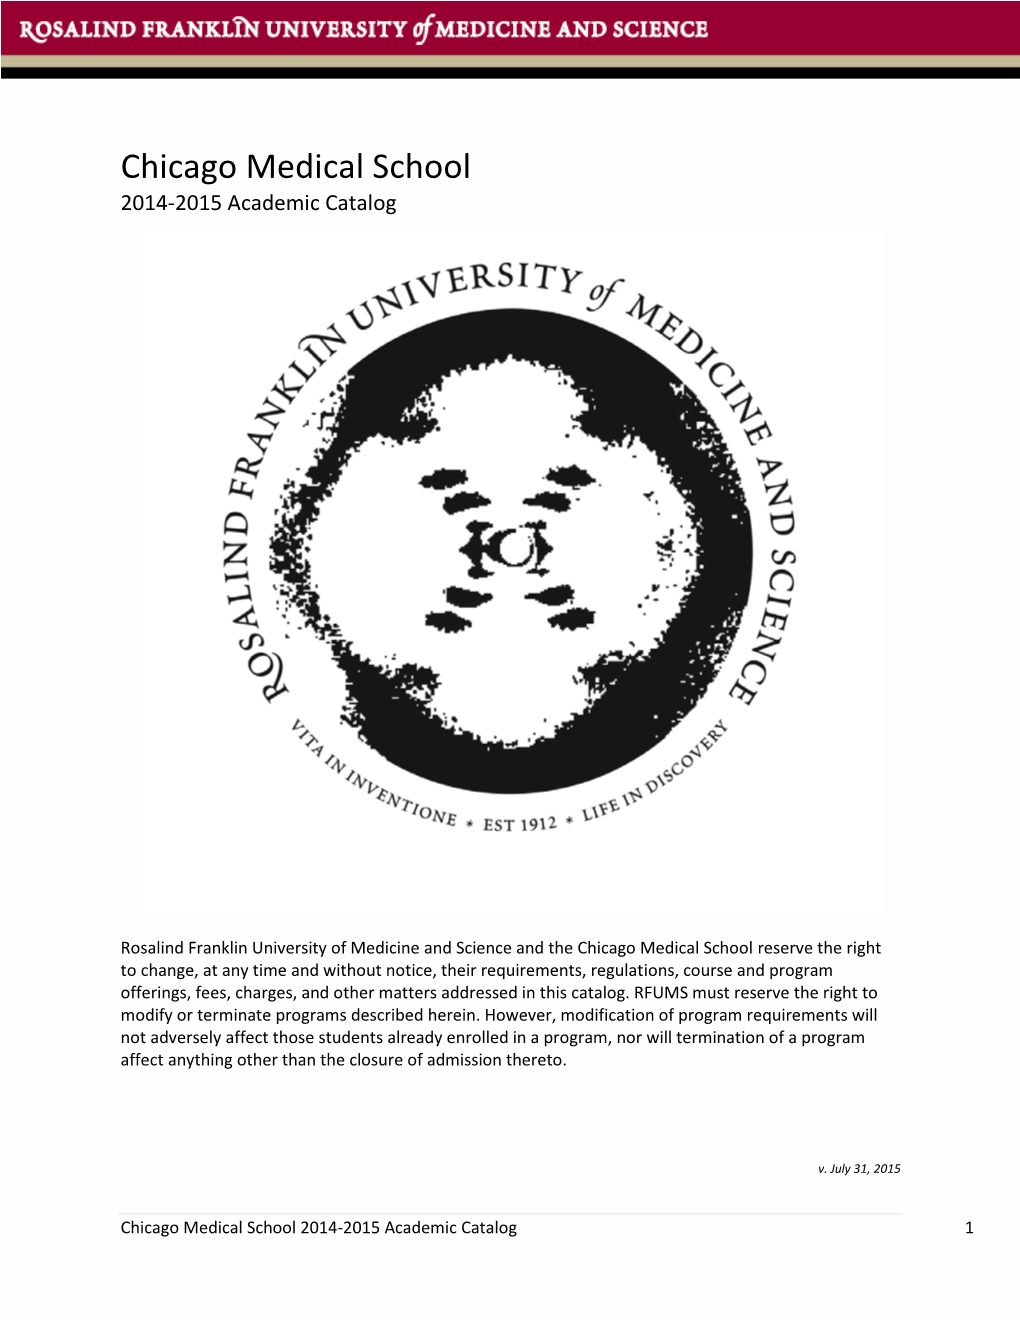 Chicago Medical School 2014-2015 Academic Catalog